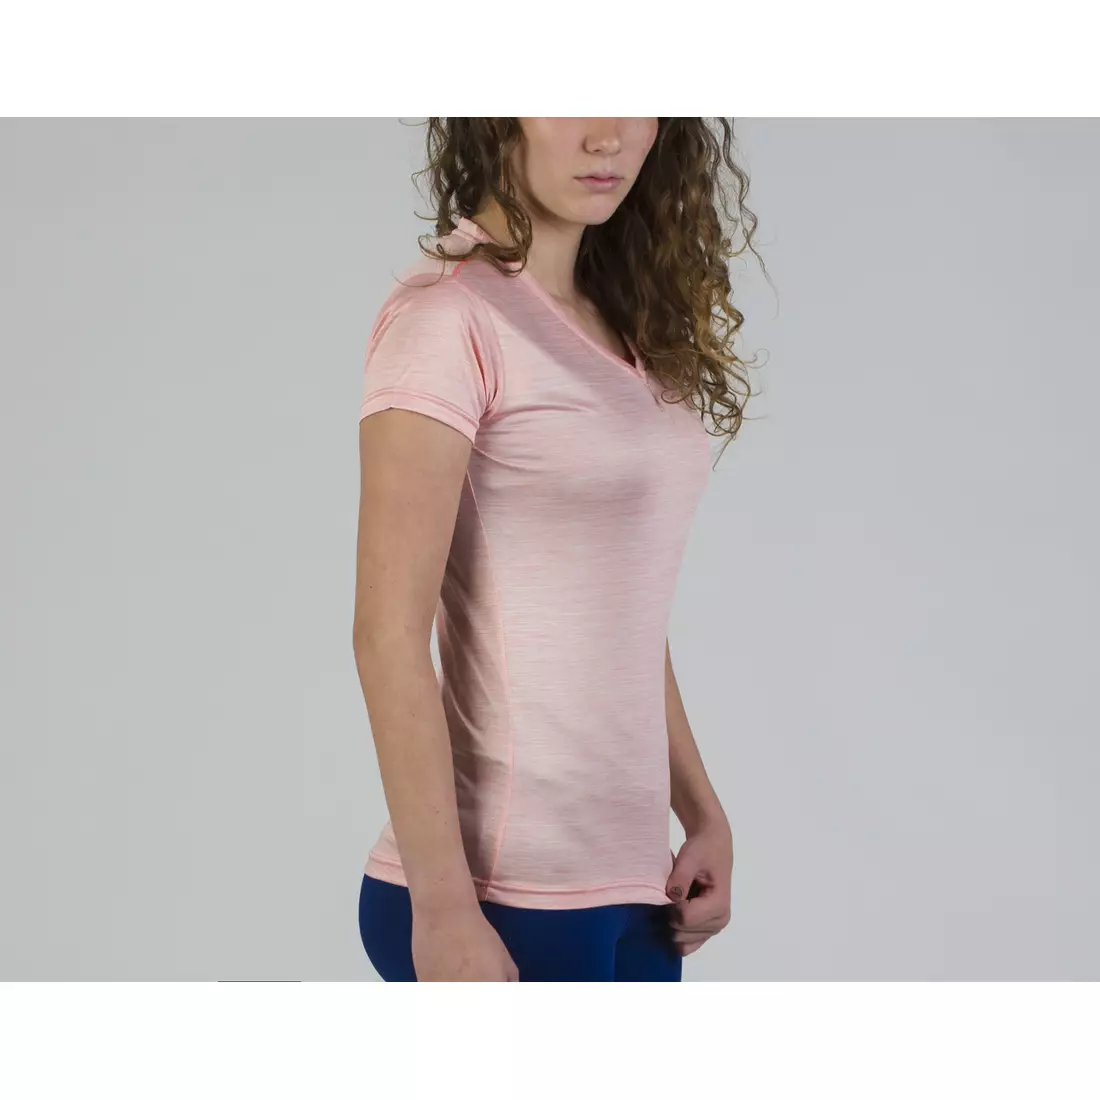 ROGELLI RUN DESIRE 840.264 - Dámske bežecké tričko K/R, pink-coral